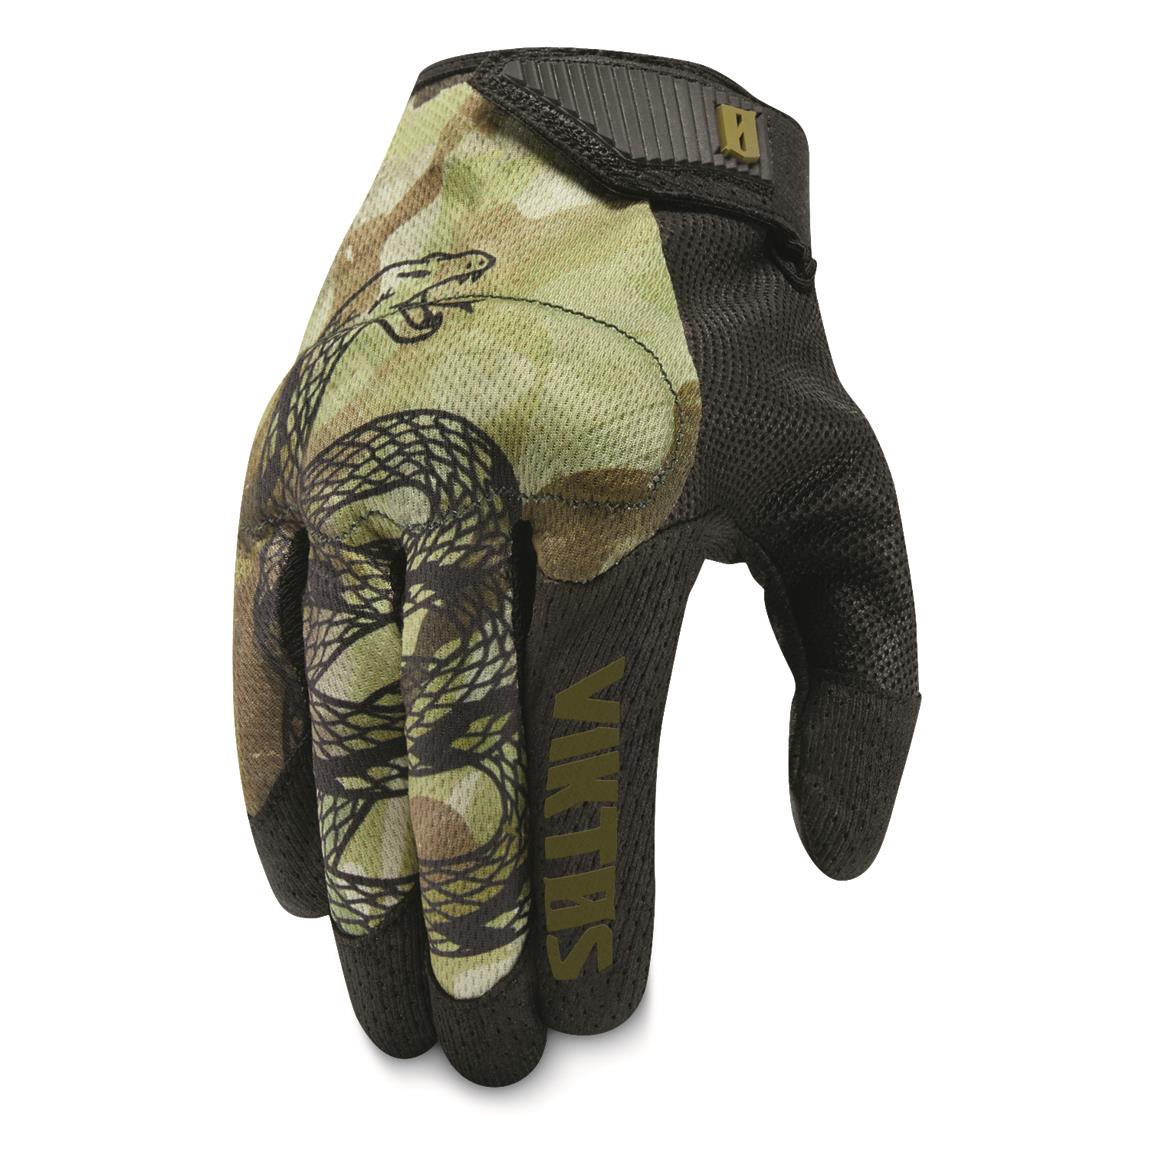 Viktos Operatus Tactical Gloves, Spartan